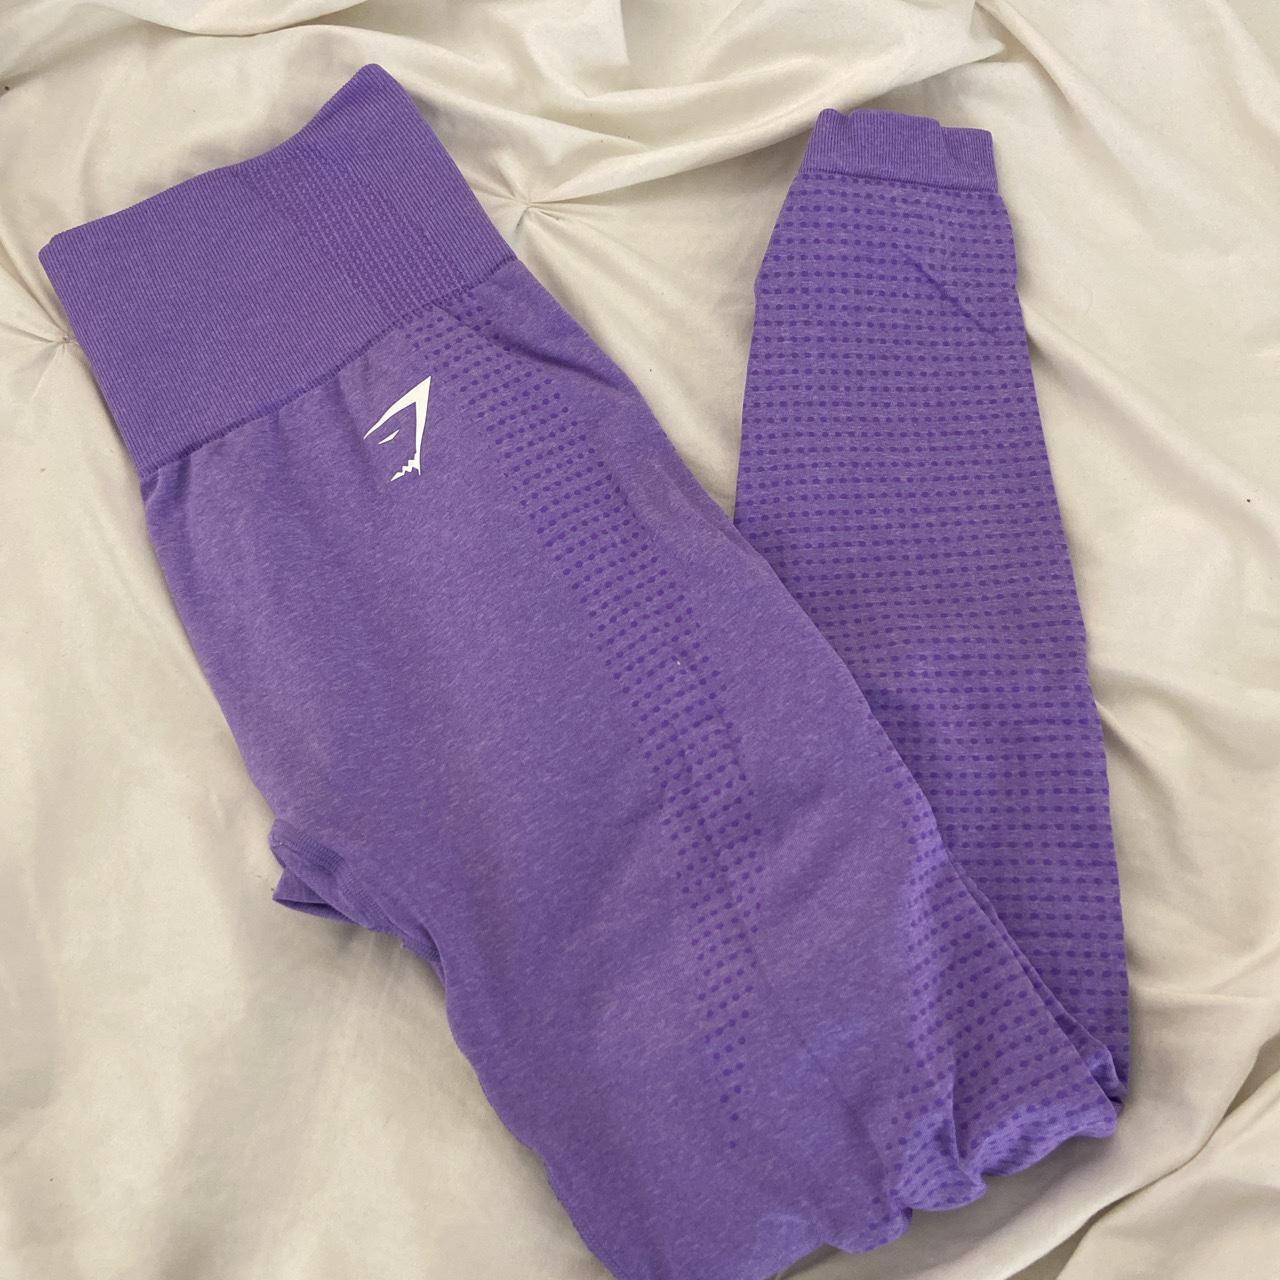 Gymshark vital seamless 2.0 leggings, color: purple - Depop